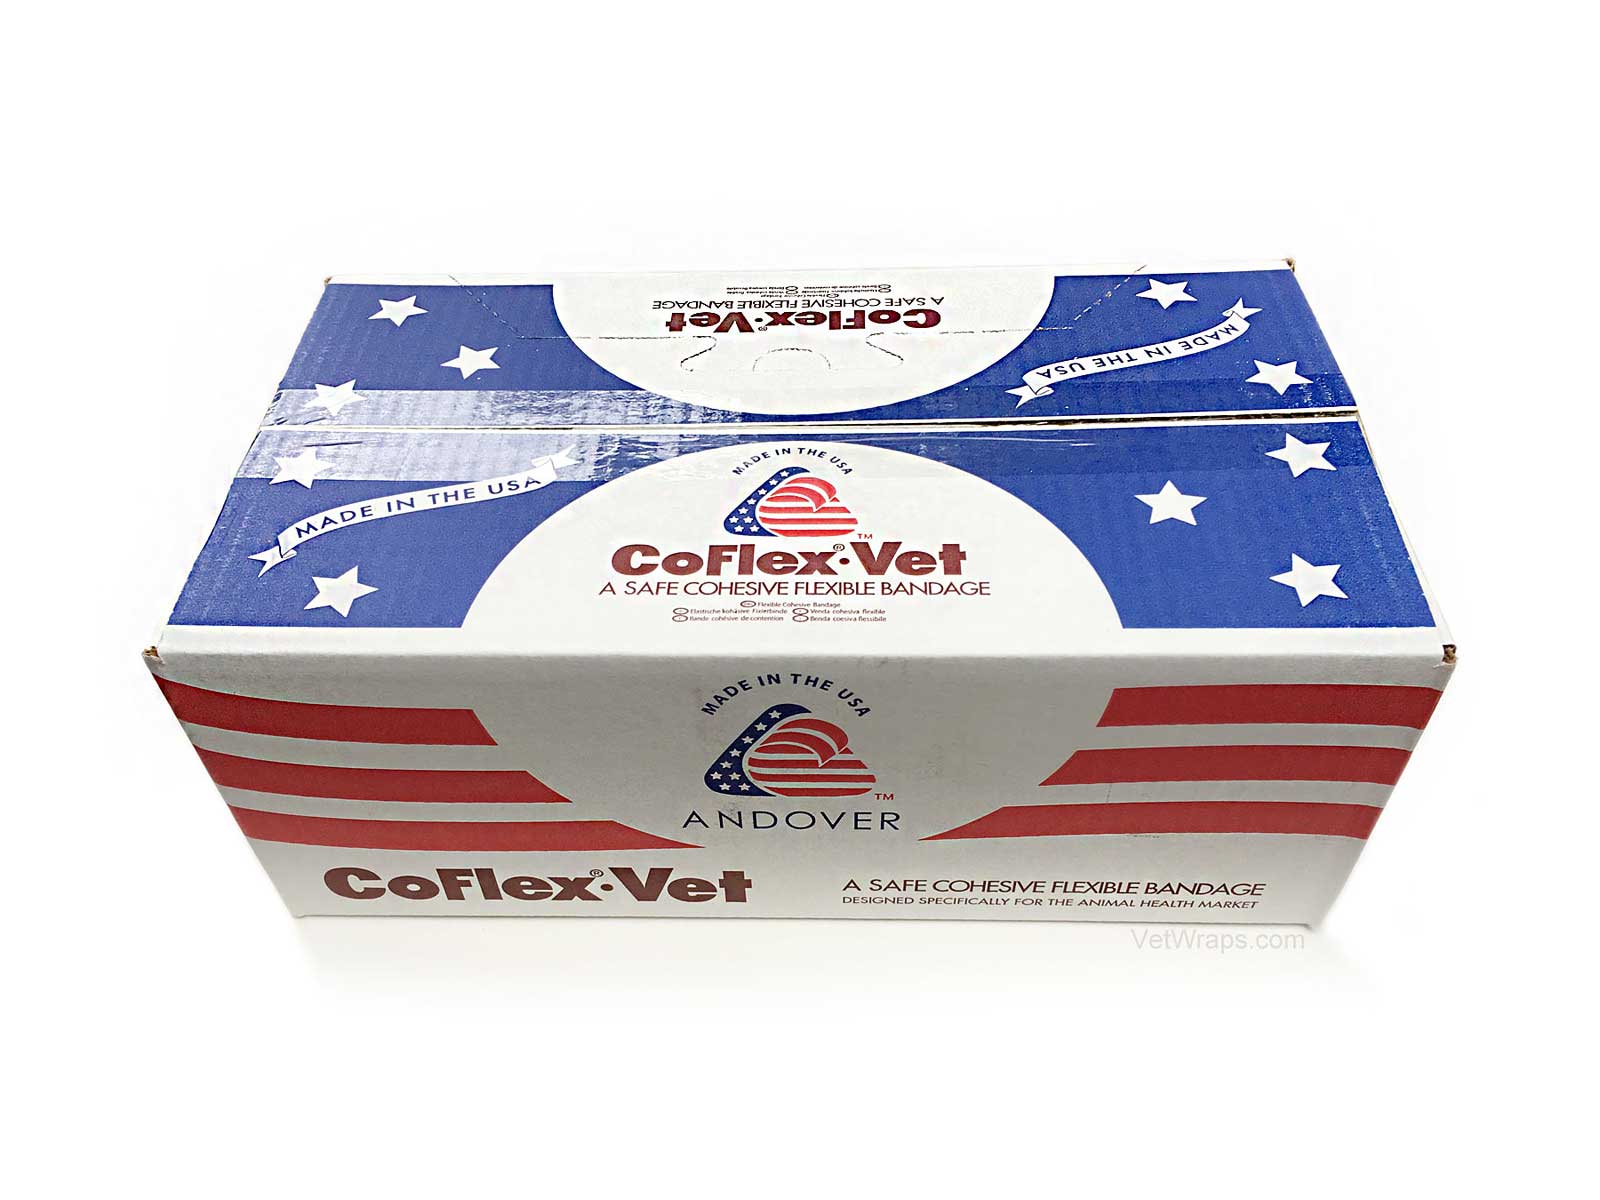 CoFlex Vet Box from Andover